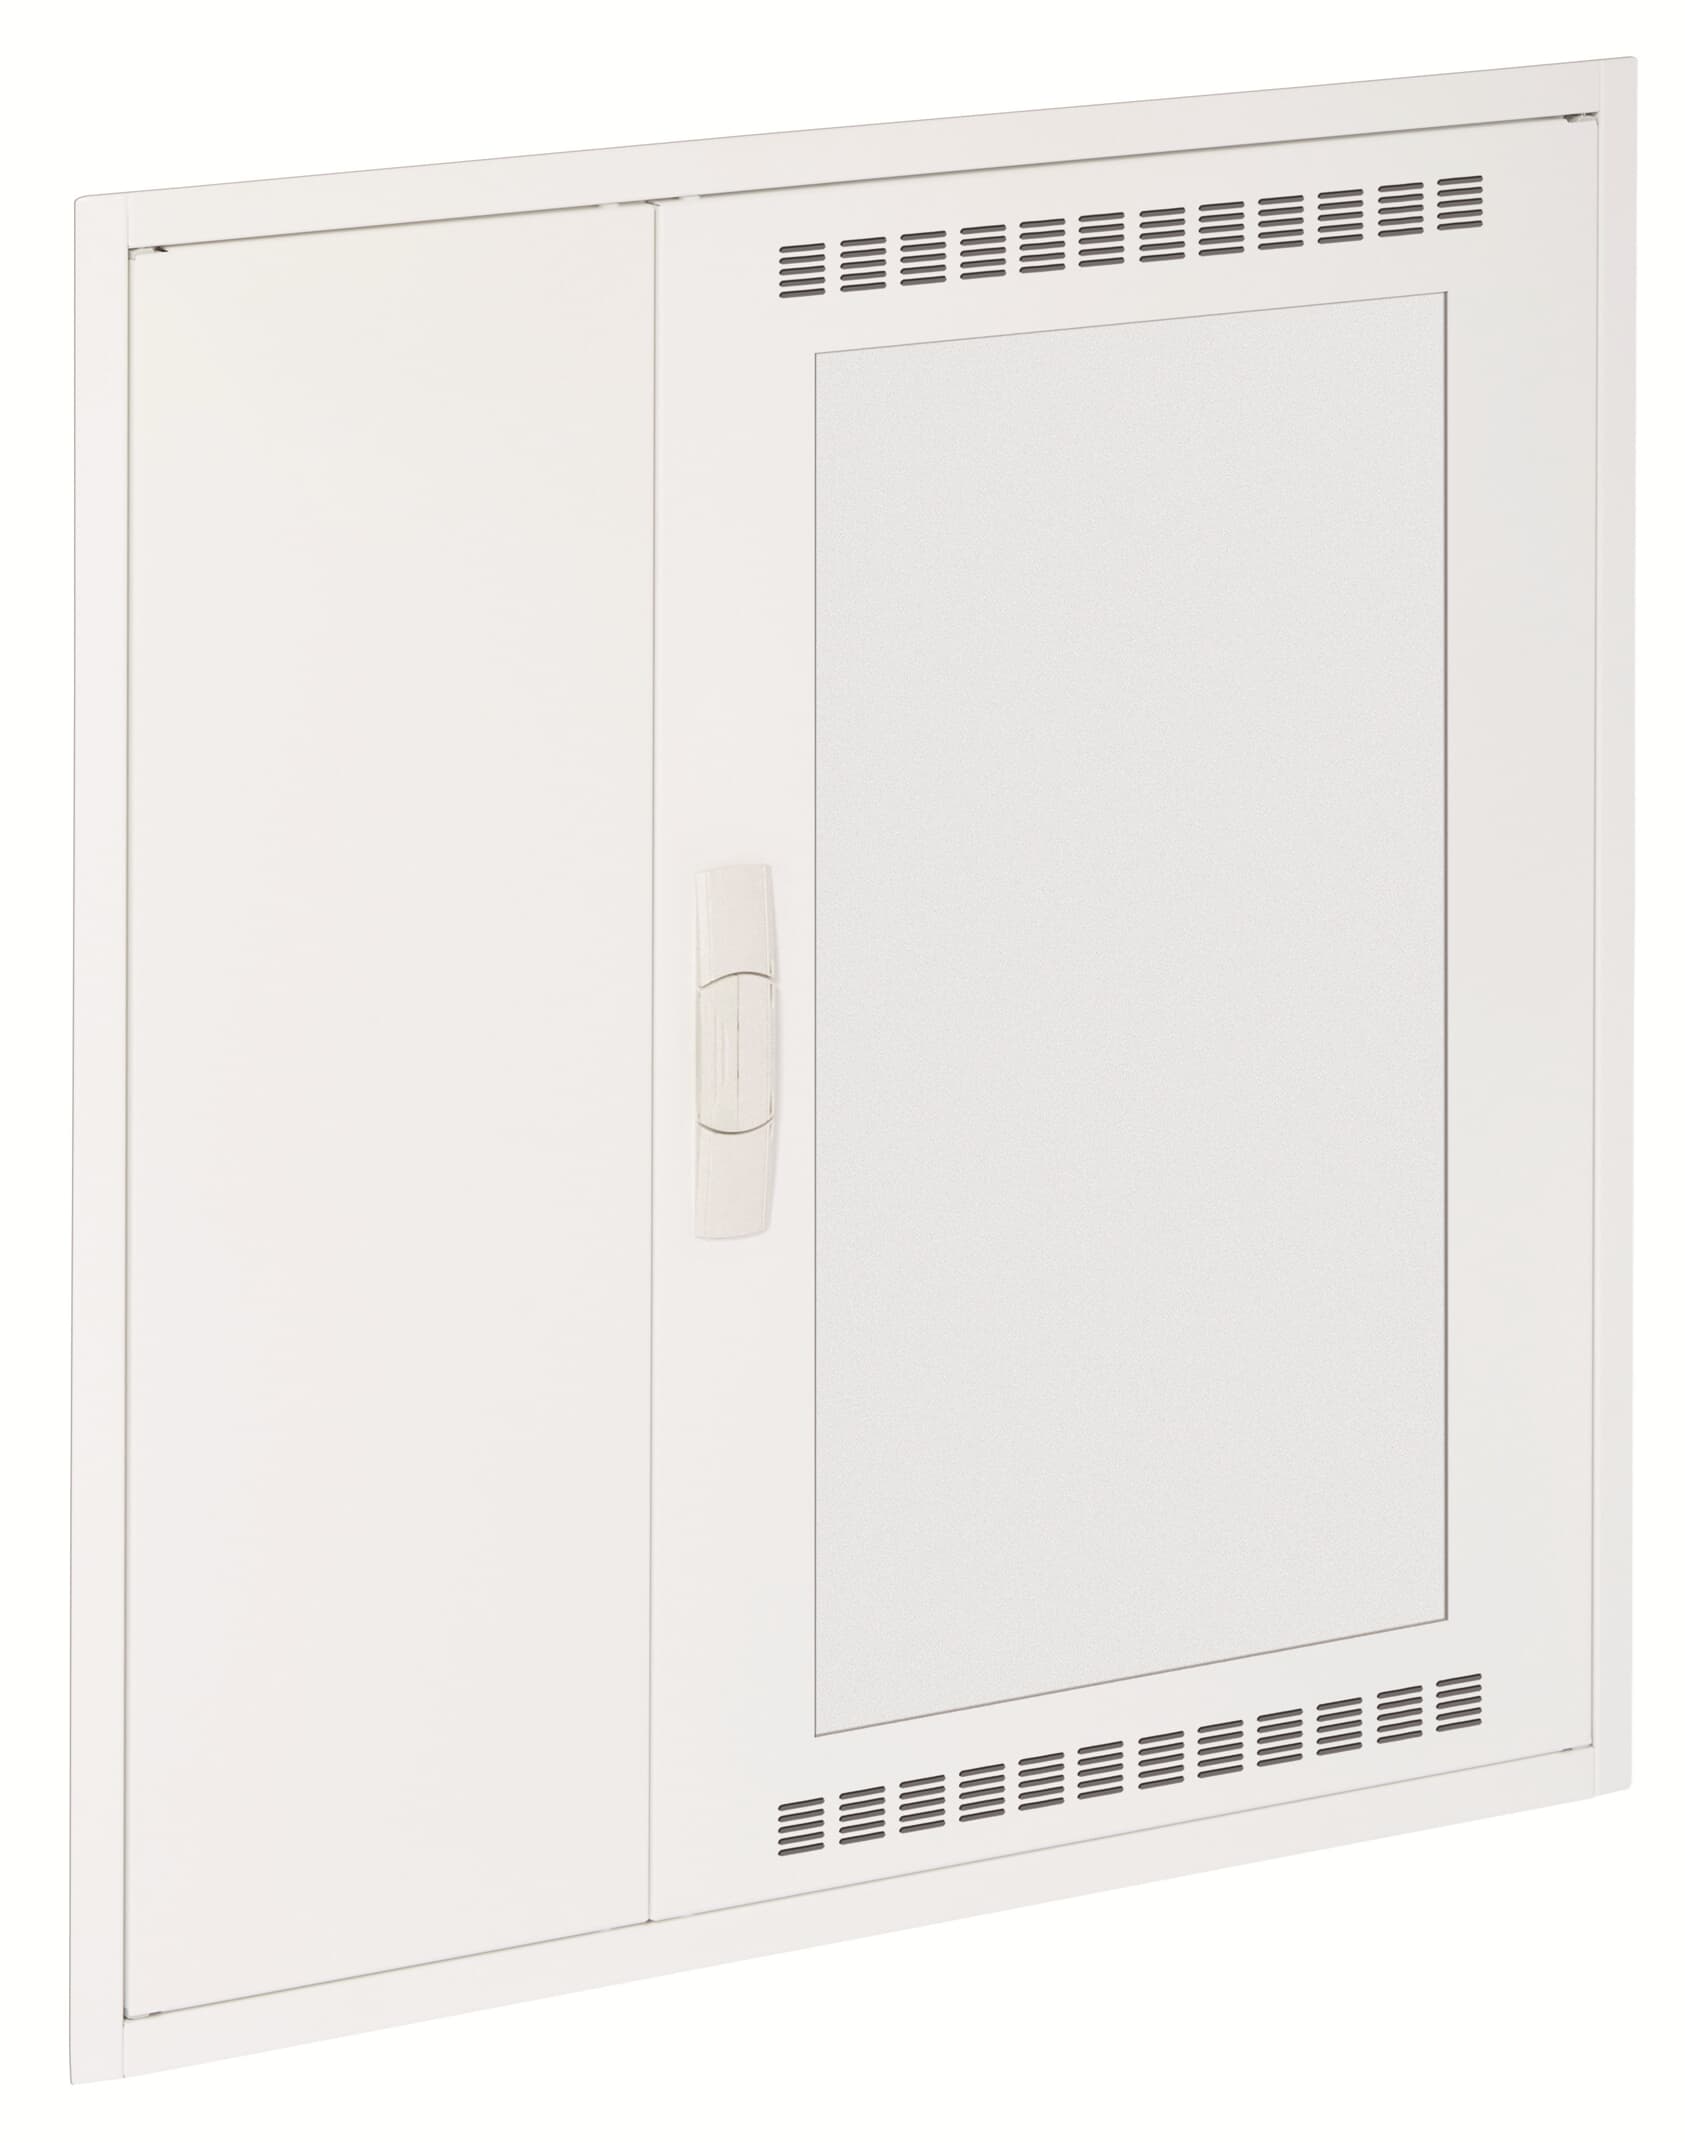 

ABB STJ Рама с WI-FI дверью с вентиляционными отверстиями ширина 3, высота 5 для шкафа U53, Белый, STJ